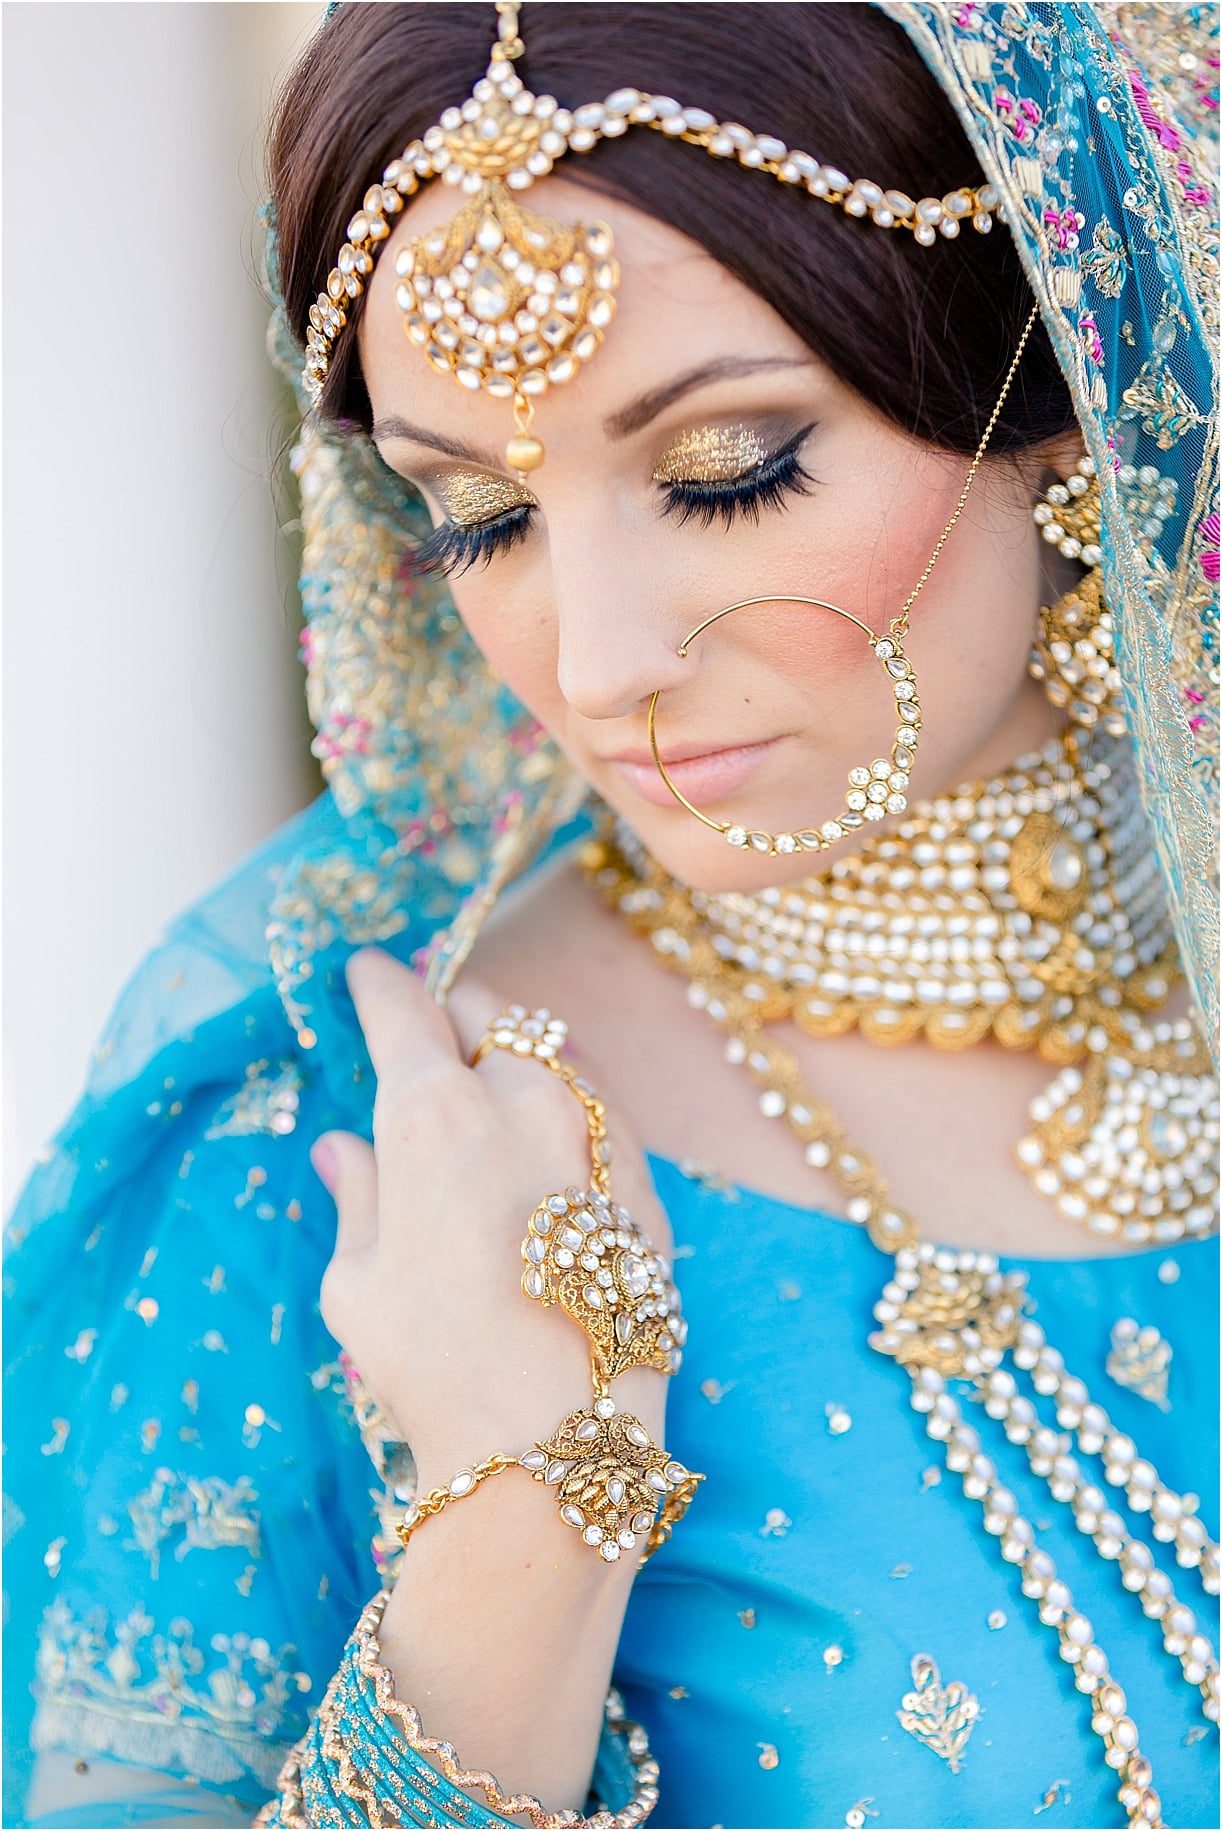 Middle Eastern Wedding | Hill City Bride Virginia Wedding Blog Travel Destination - makeup, gold, jewelry, sari